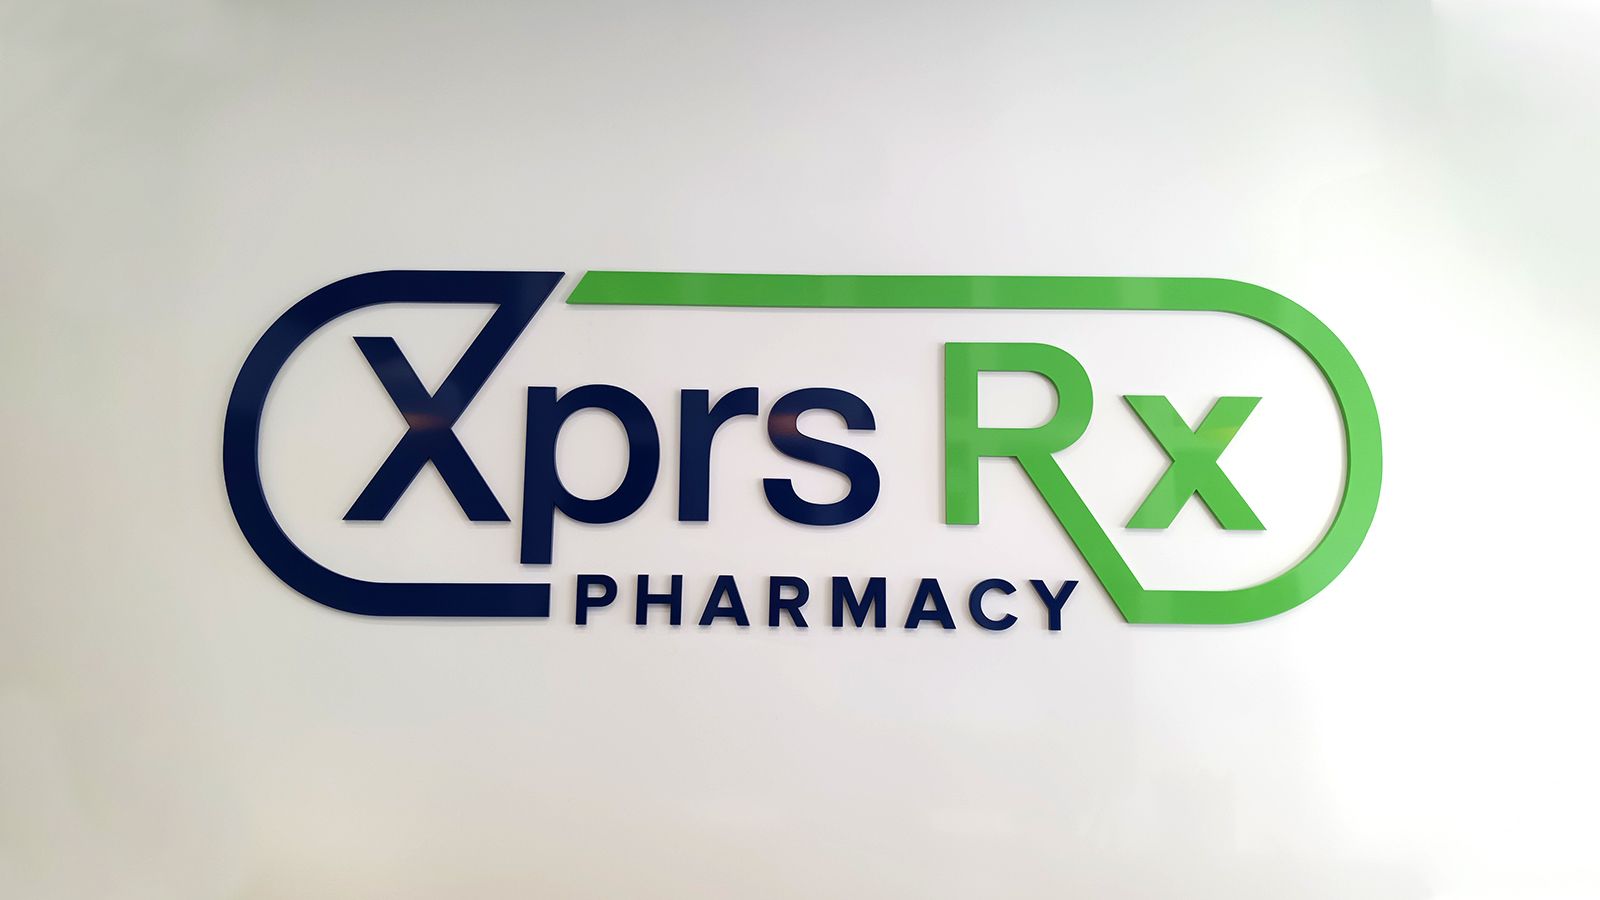 Xprs Rx Pharmacy acrylic sign